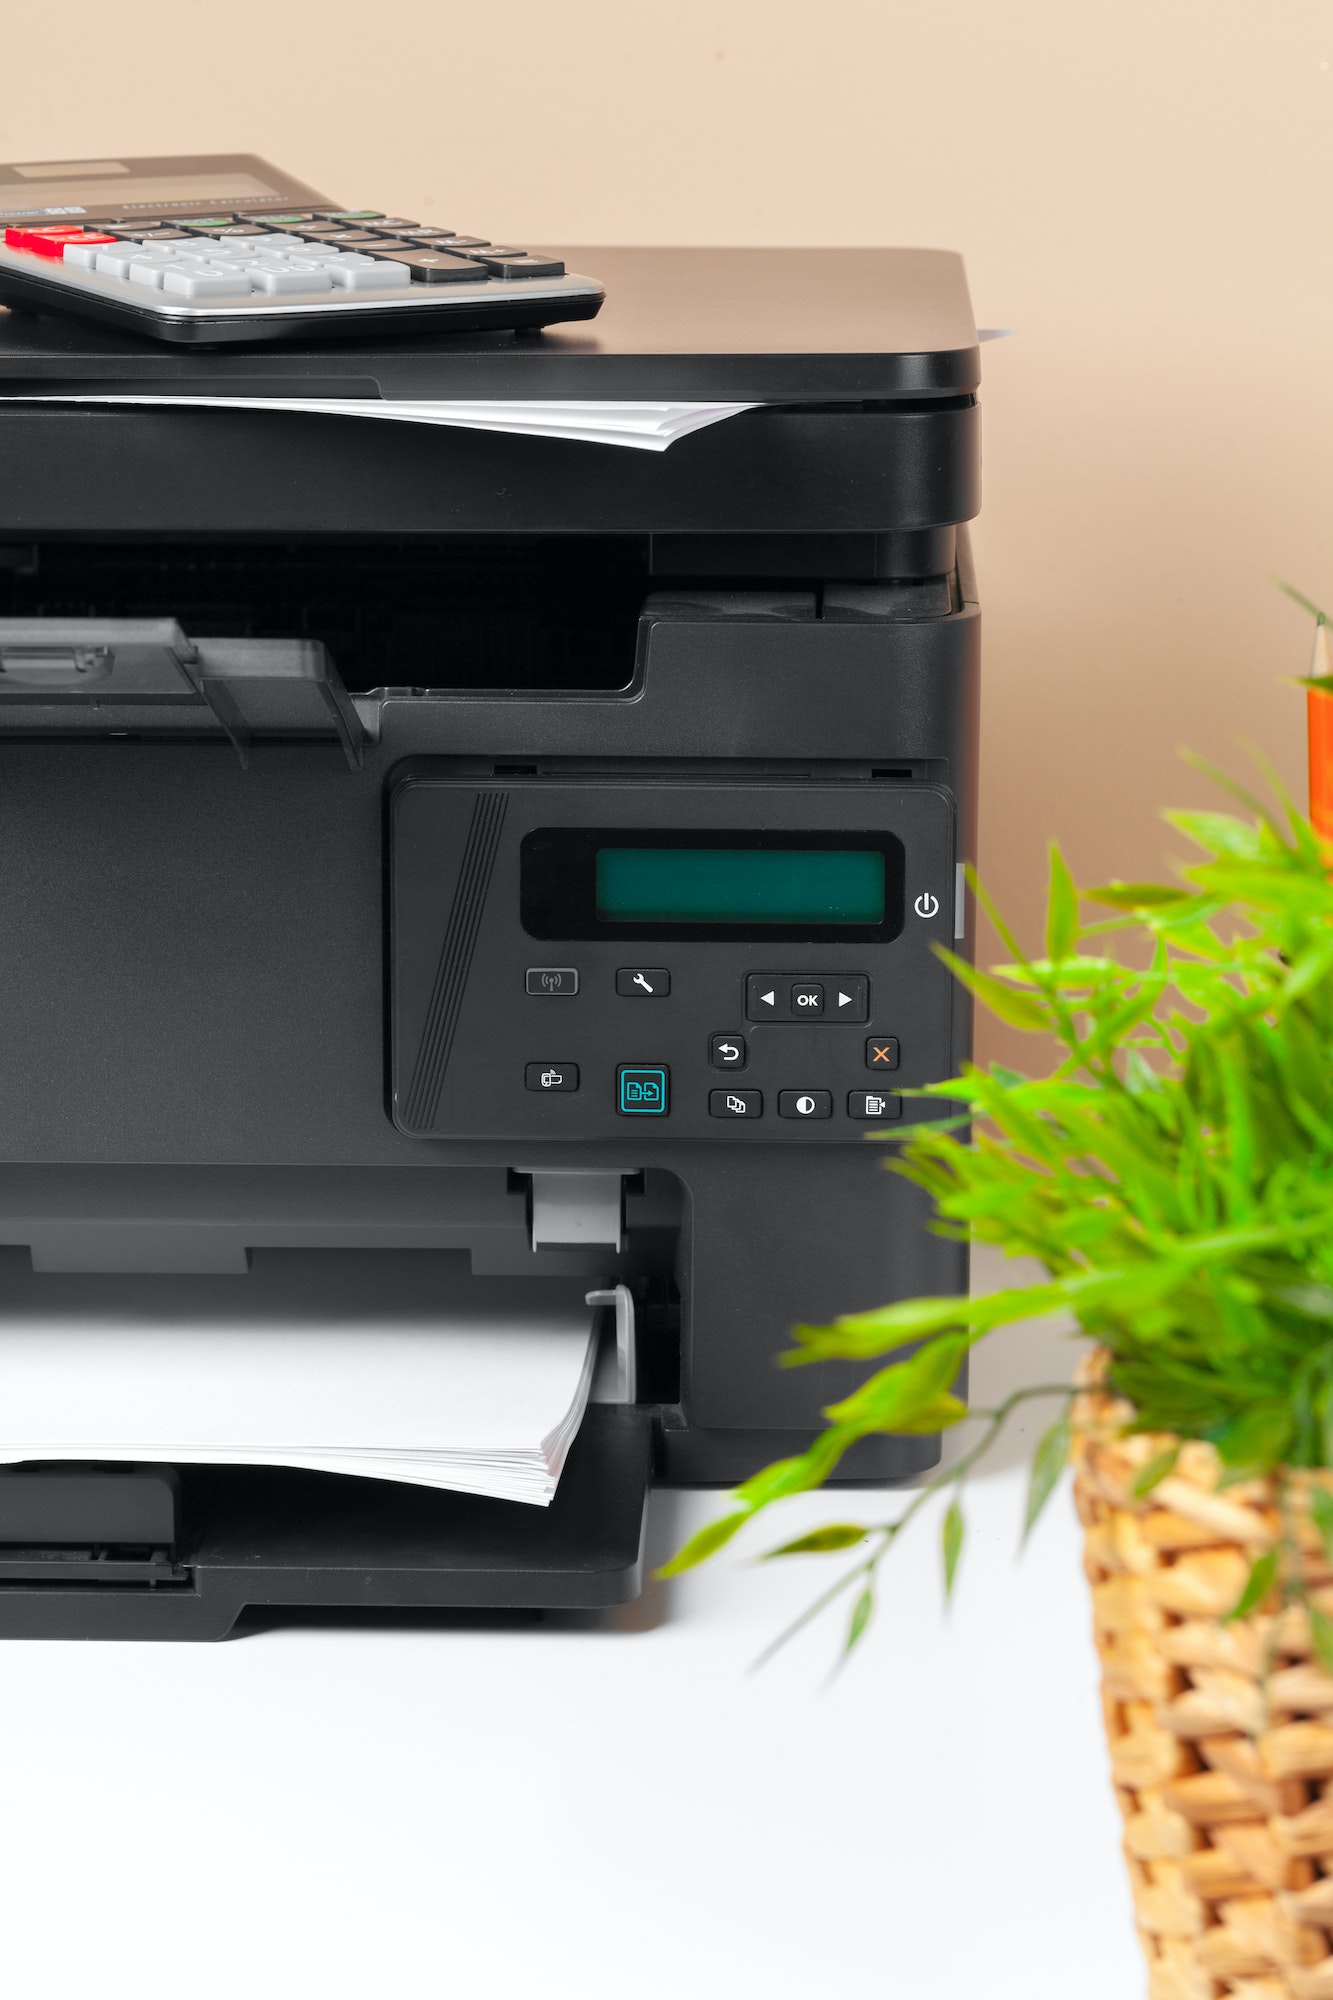 Printer, copier, scanner in office. Workplace